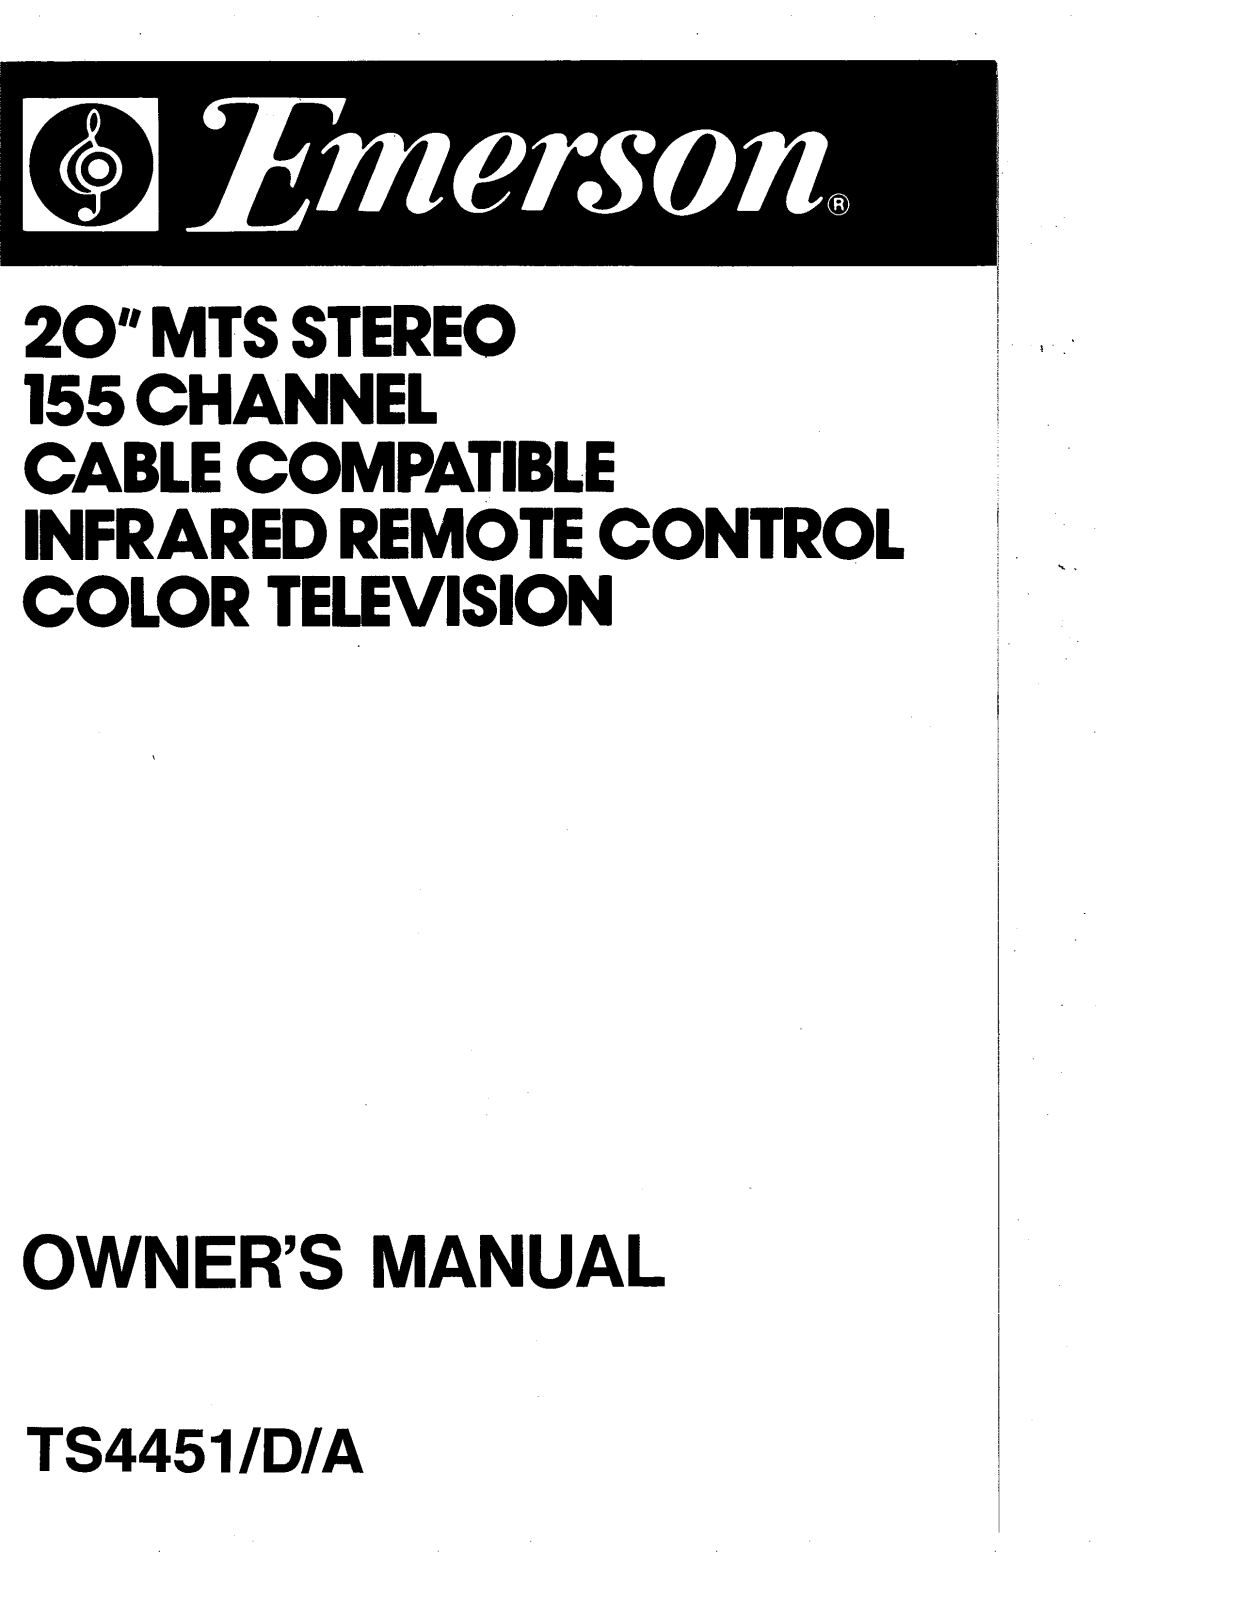 EMERSON TS4451 User Manual